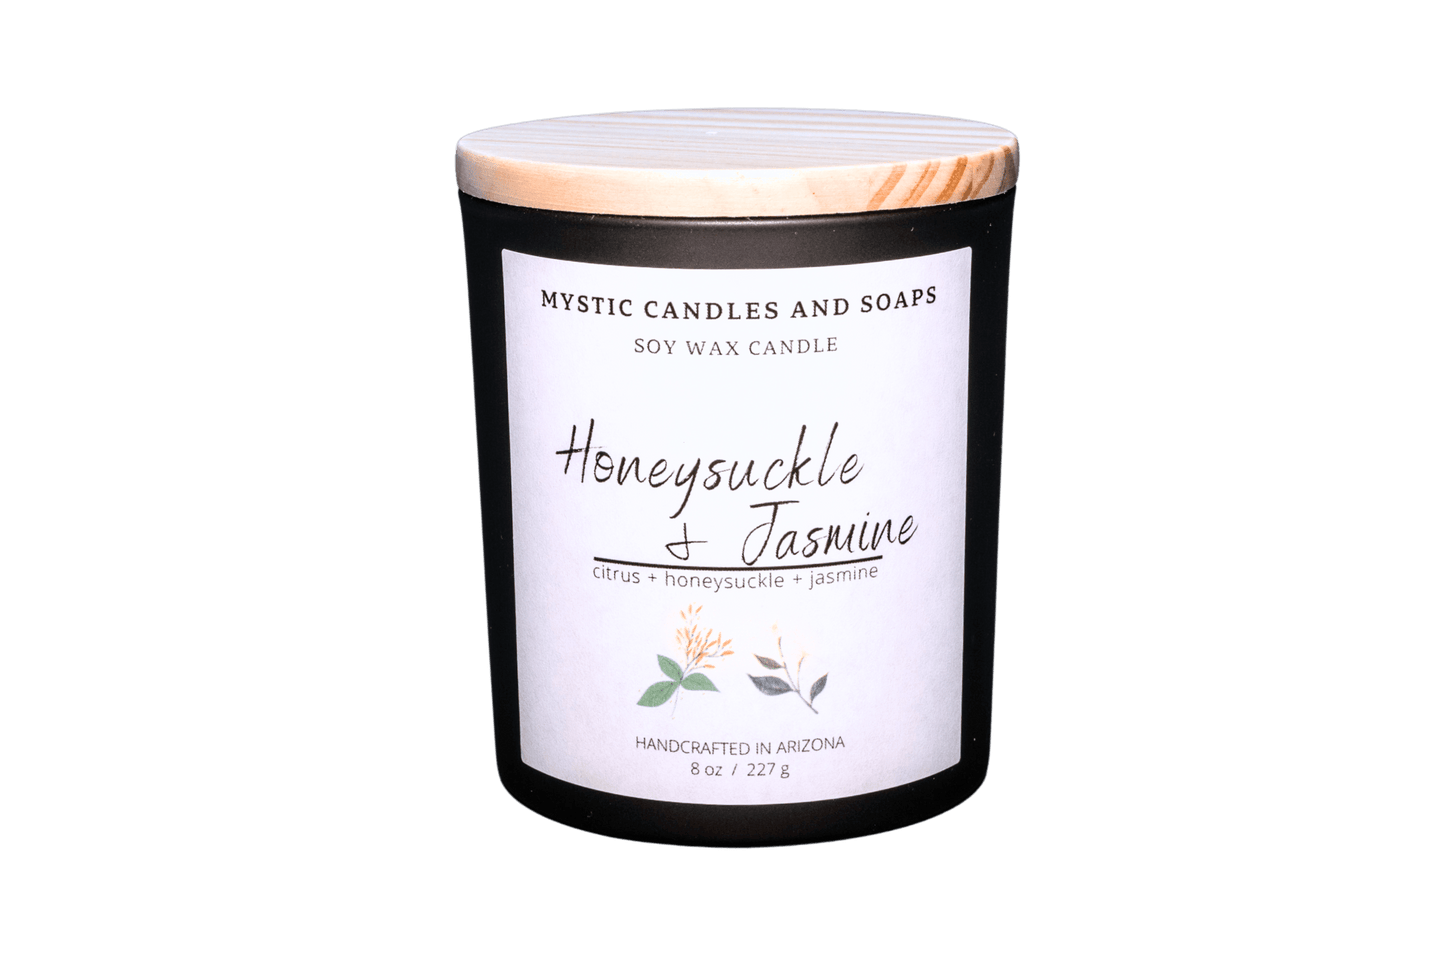 Honeysuckle & Jasmine scented soy wax candle